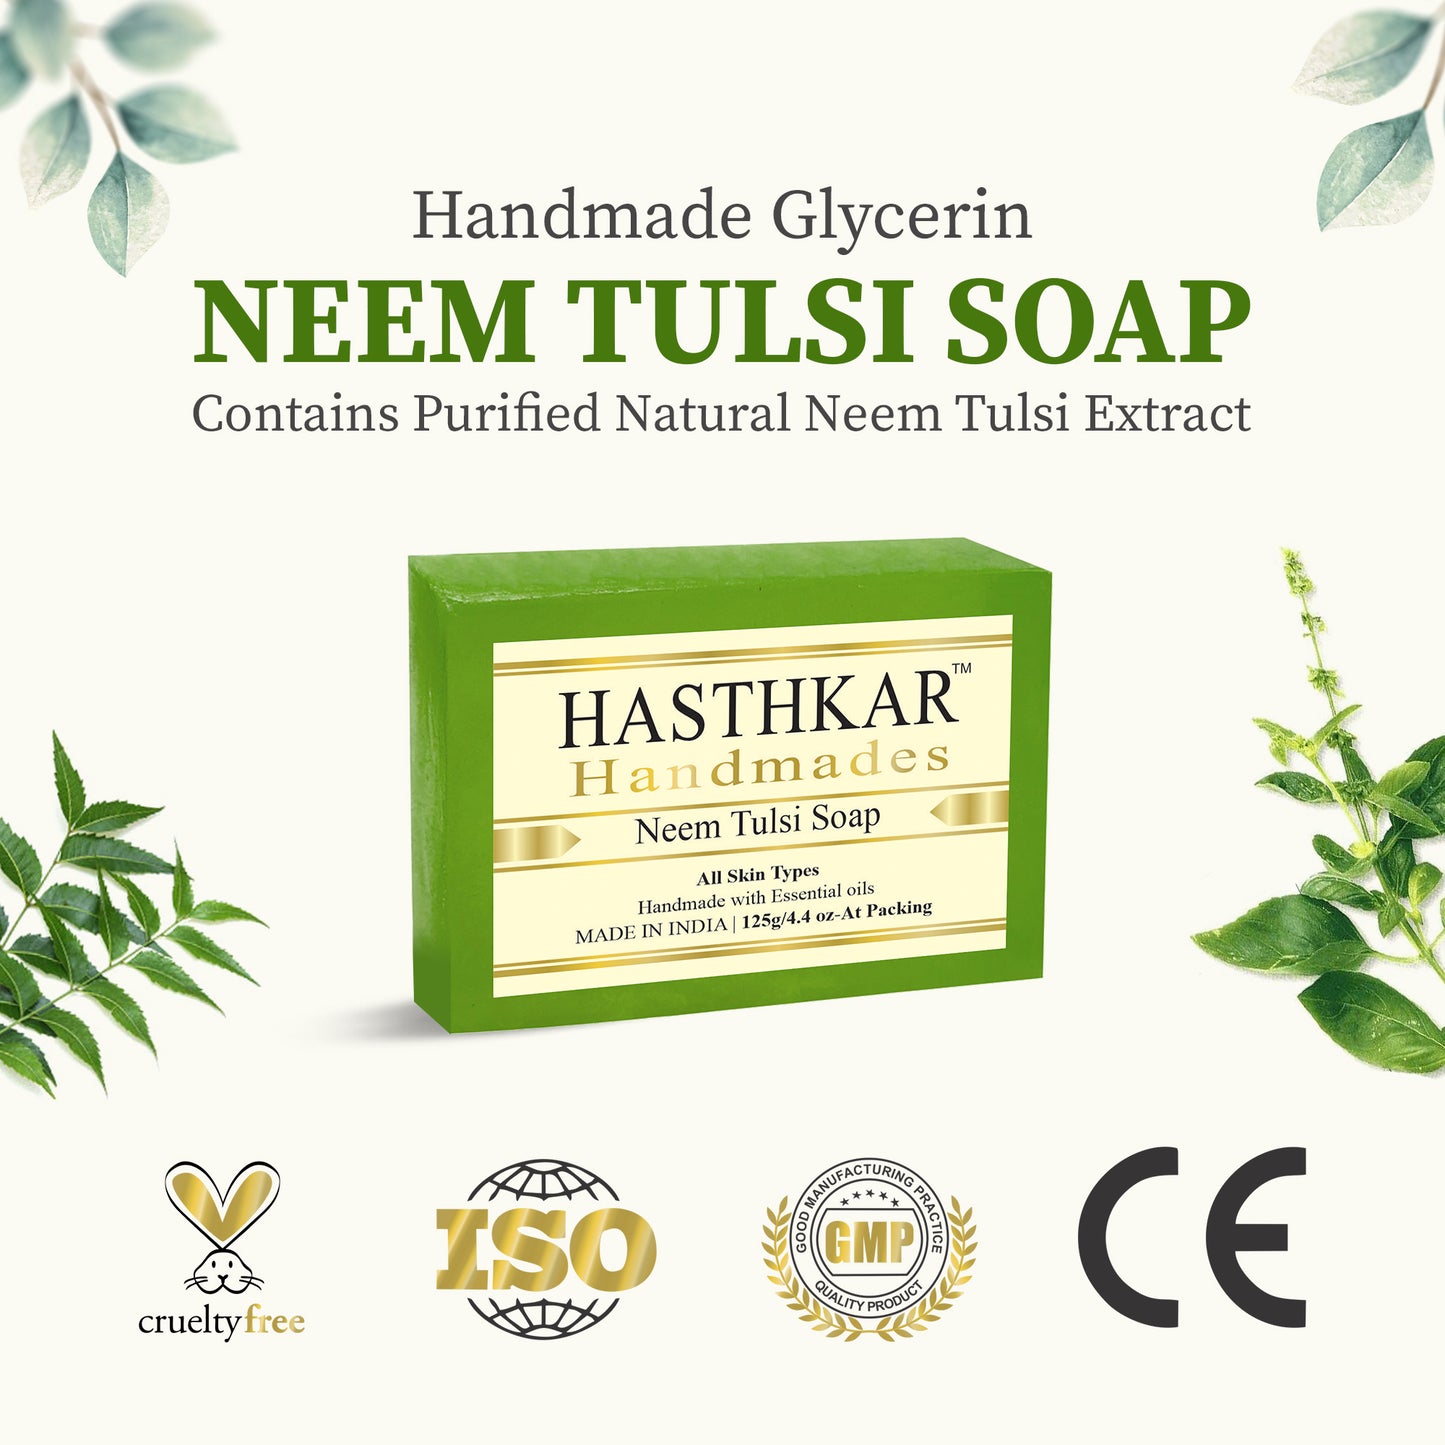 Hasthkar handmades neem tulsi bathing soap men women extract